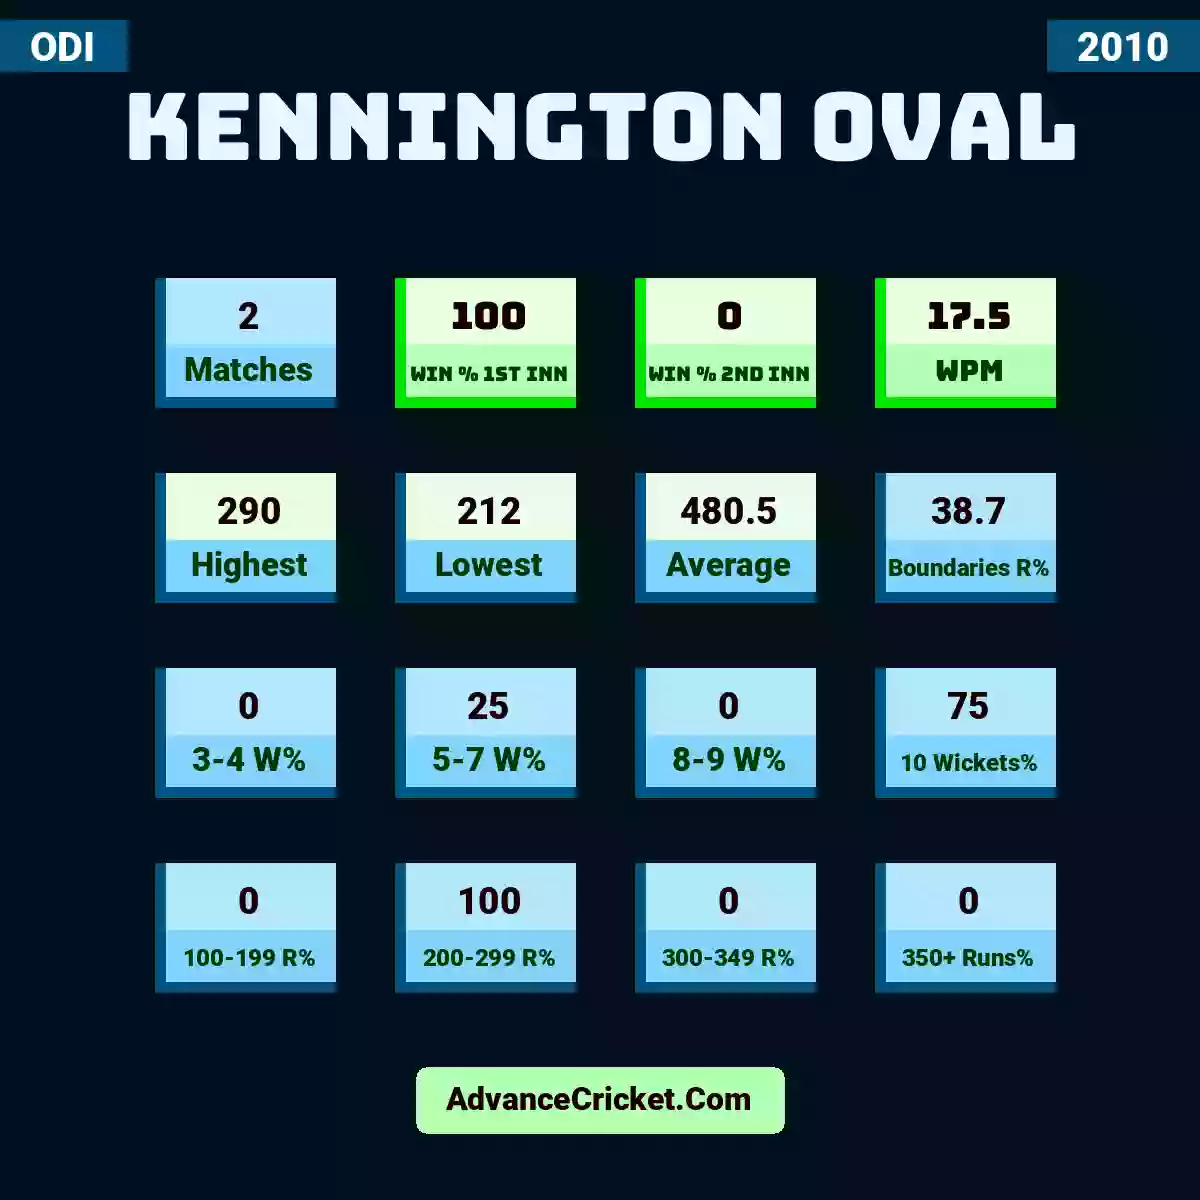 Image showing Kennington Oval with Matches: 2, Win % 1st Inn: 100, Win % 2nd Inn: 0, WPM: 17.5, Highest: 290, Lowest: 212, Average: 480.5, Boundaries R%: 38.7, 3-4 W%: 0, 5-7 W%: 25, 8-9 W%: 0, 10 Wickets%: 75, 100-199 R%: 0, 200-299 R%: 100, 300-349 R%: 0, 350+ Runs%: 0.